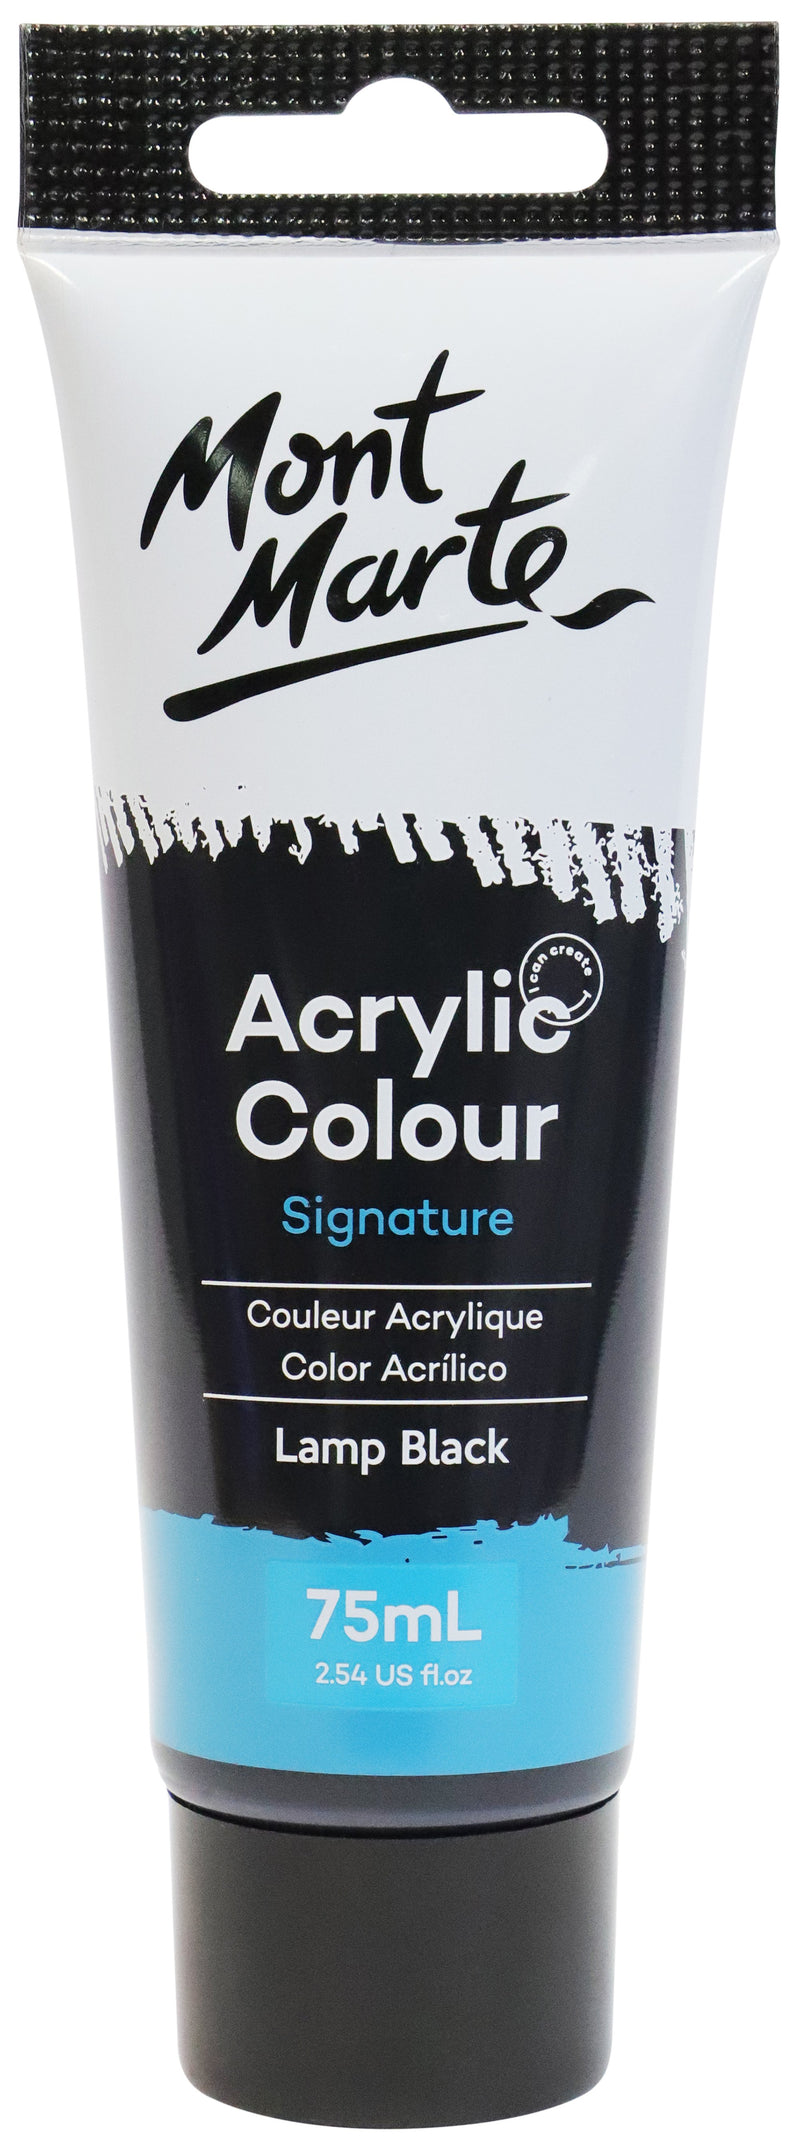 Acrylic Paint, Lamp Black, Semi-Matte, 75ml, pnt0174